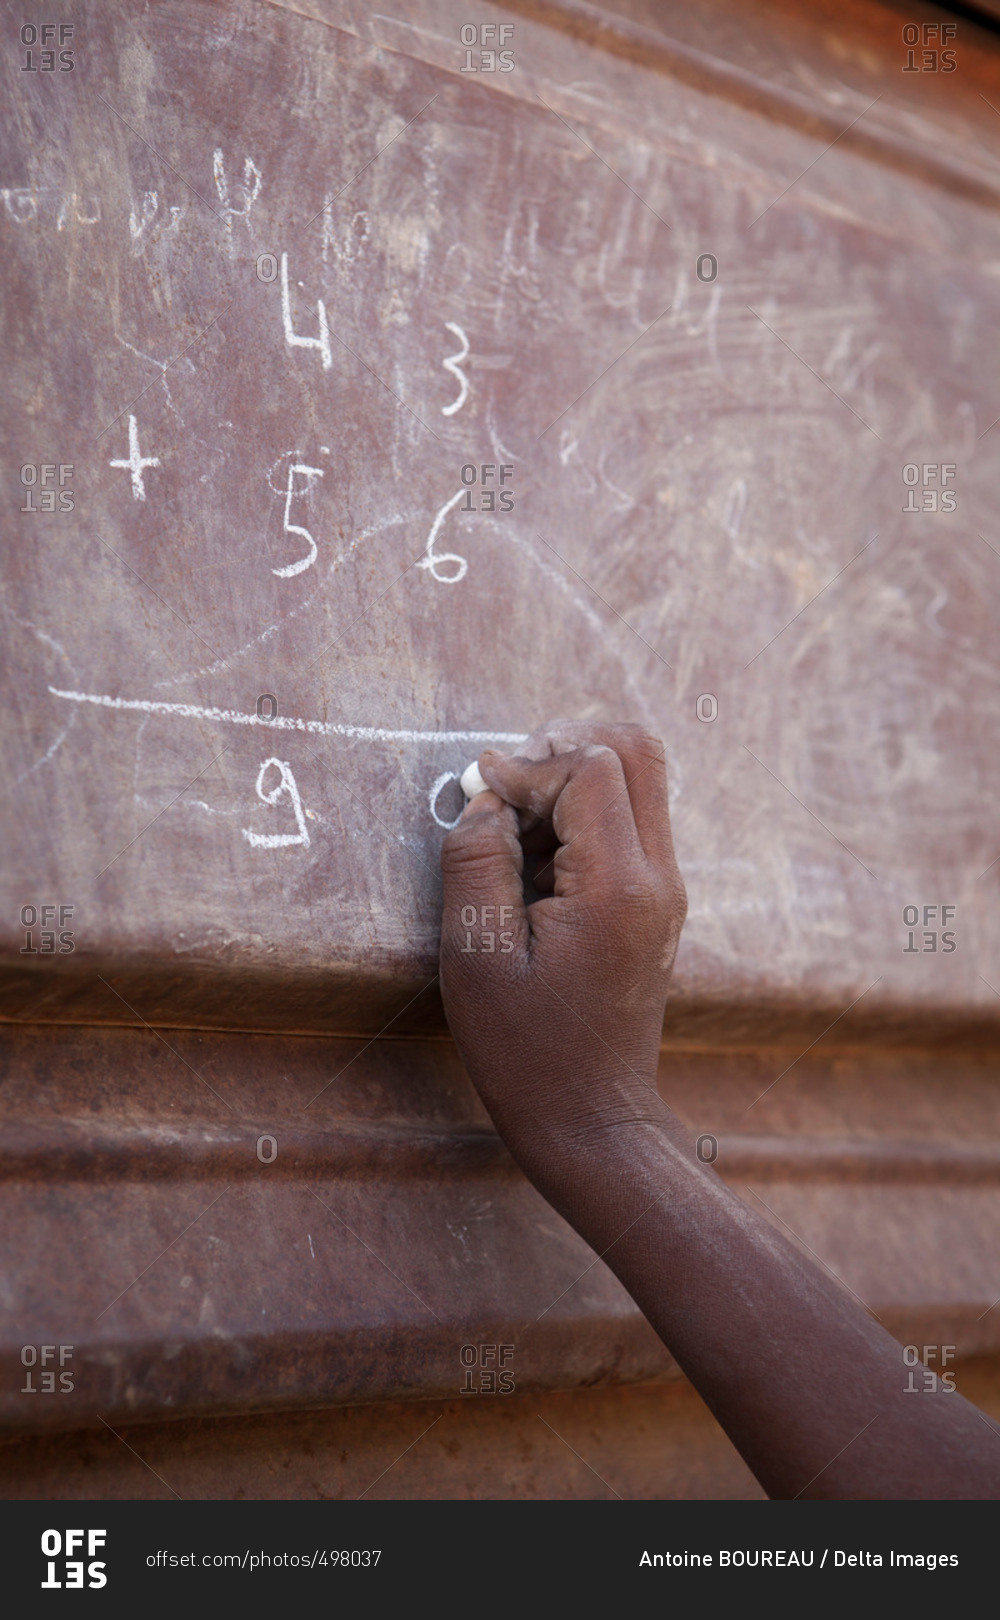 Burkina Faso, Ouagadougou area, Girl revising her math lessons with a chalk on a metallic door